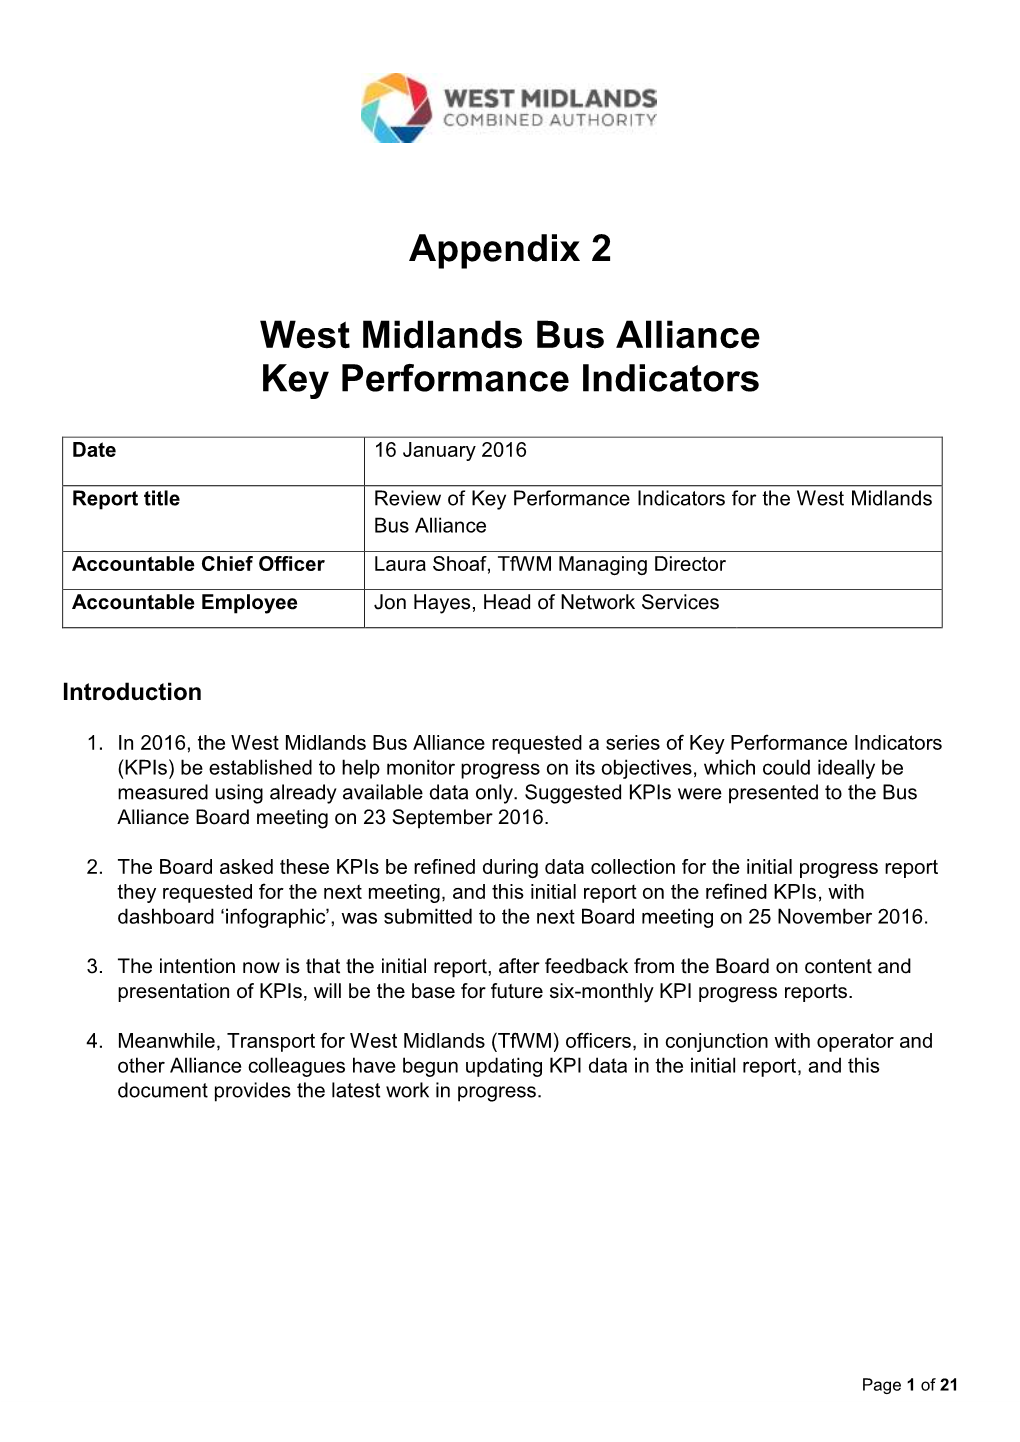 Appendix 2 West Midlands Bus Alliance Key Performance Indicators